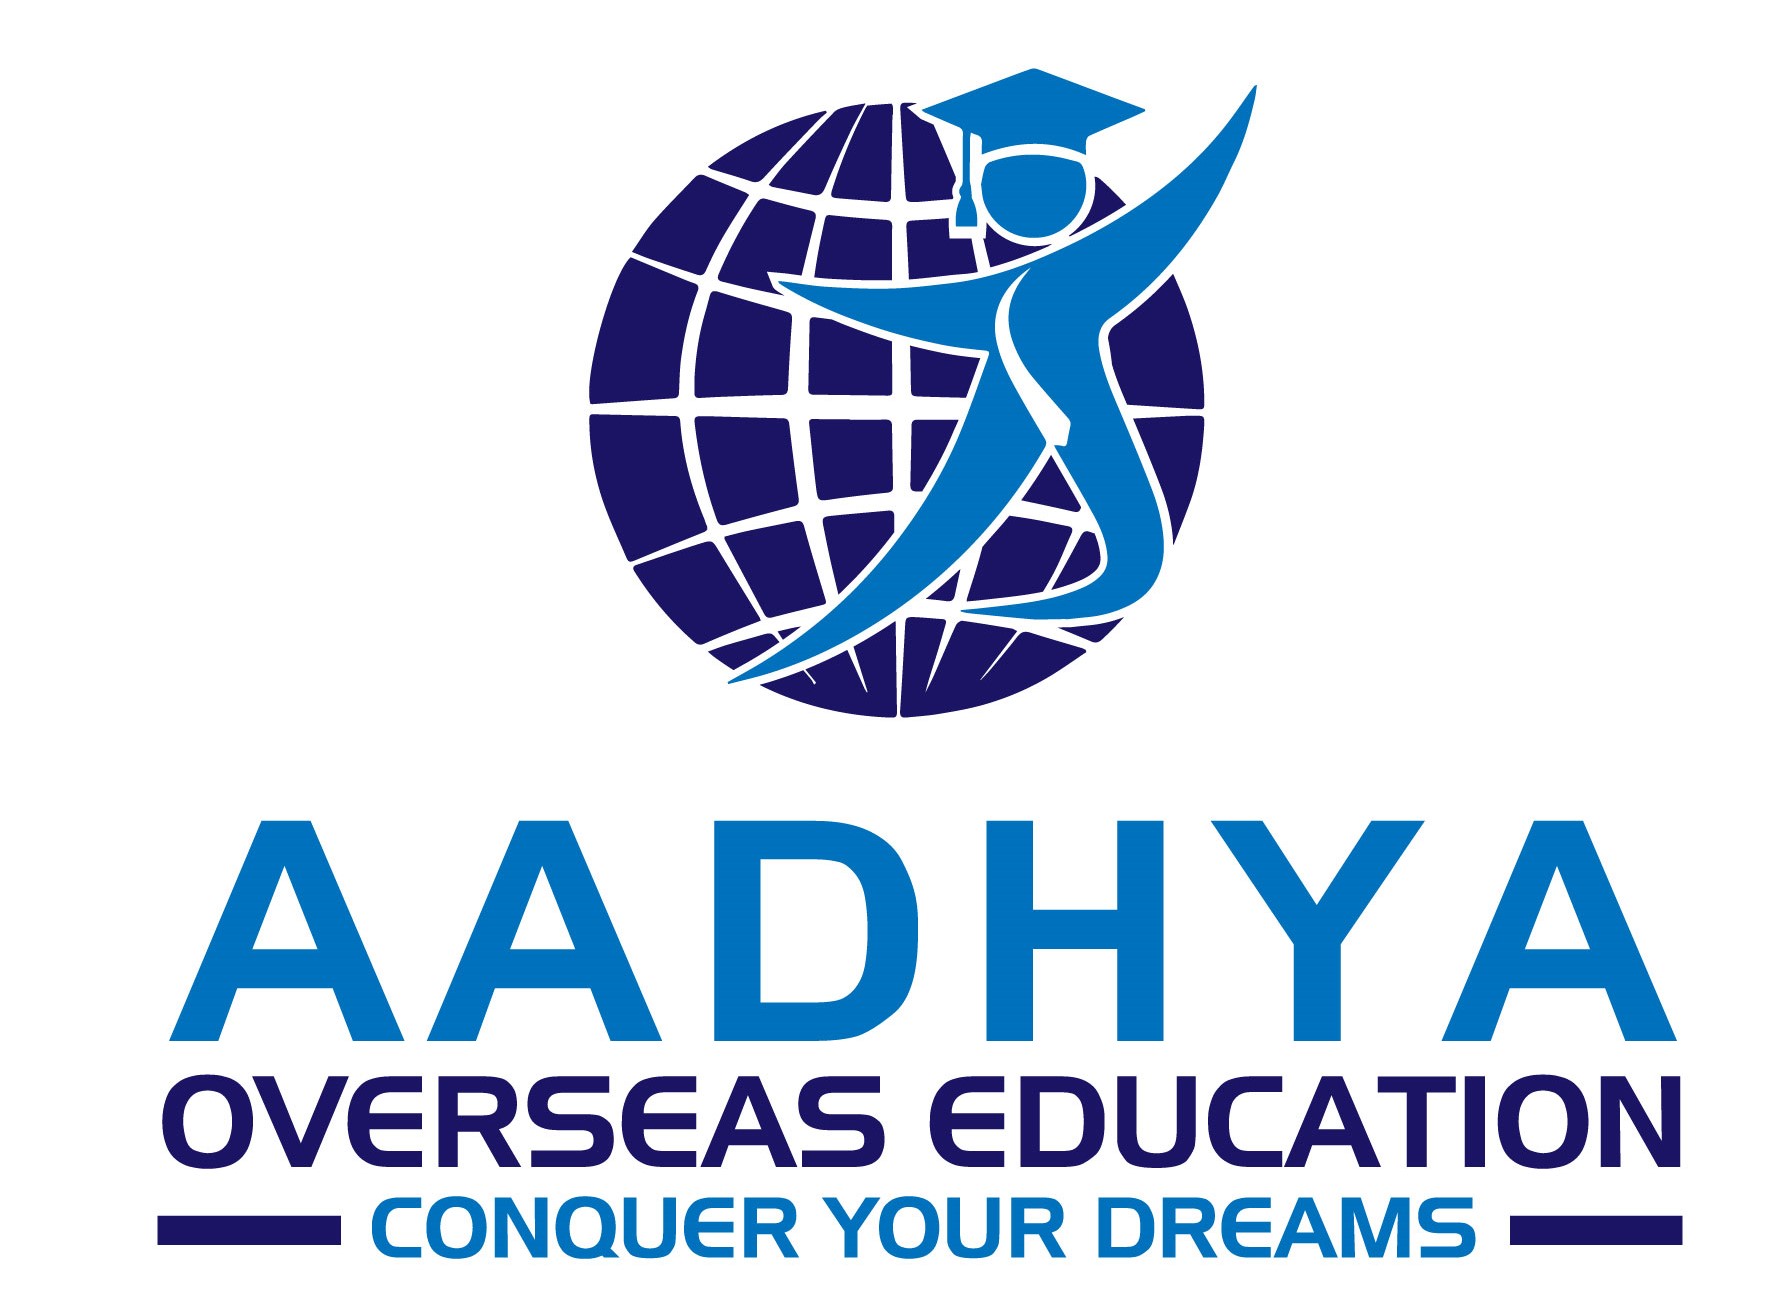 Aadhya Overseas Education